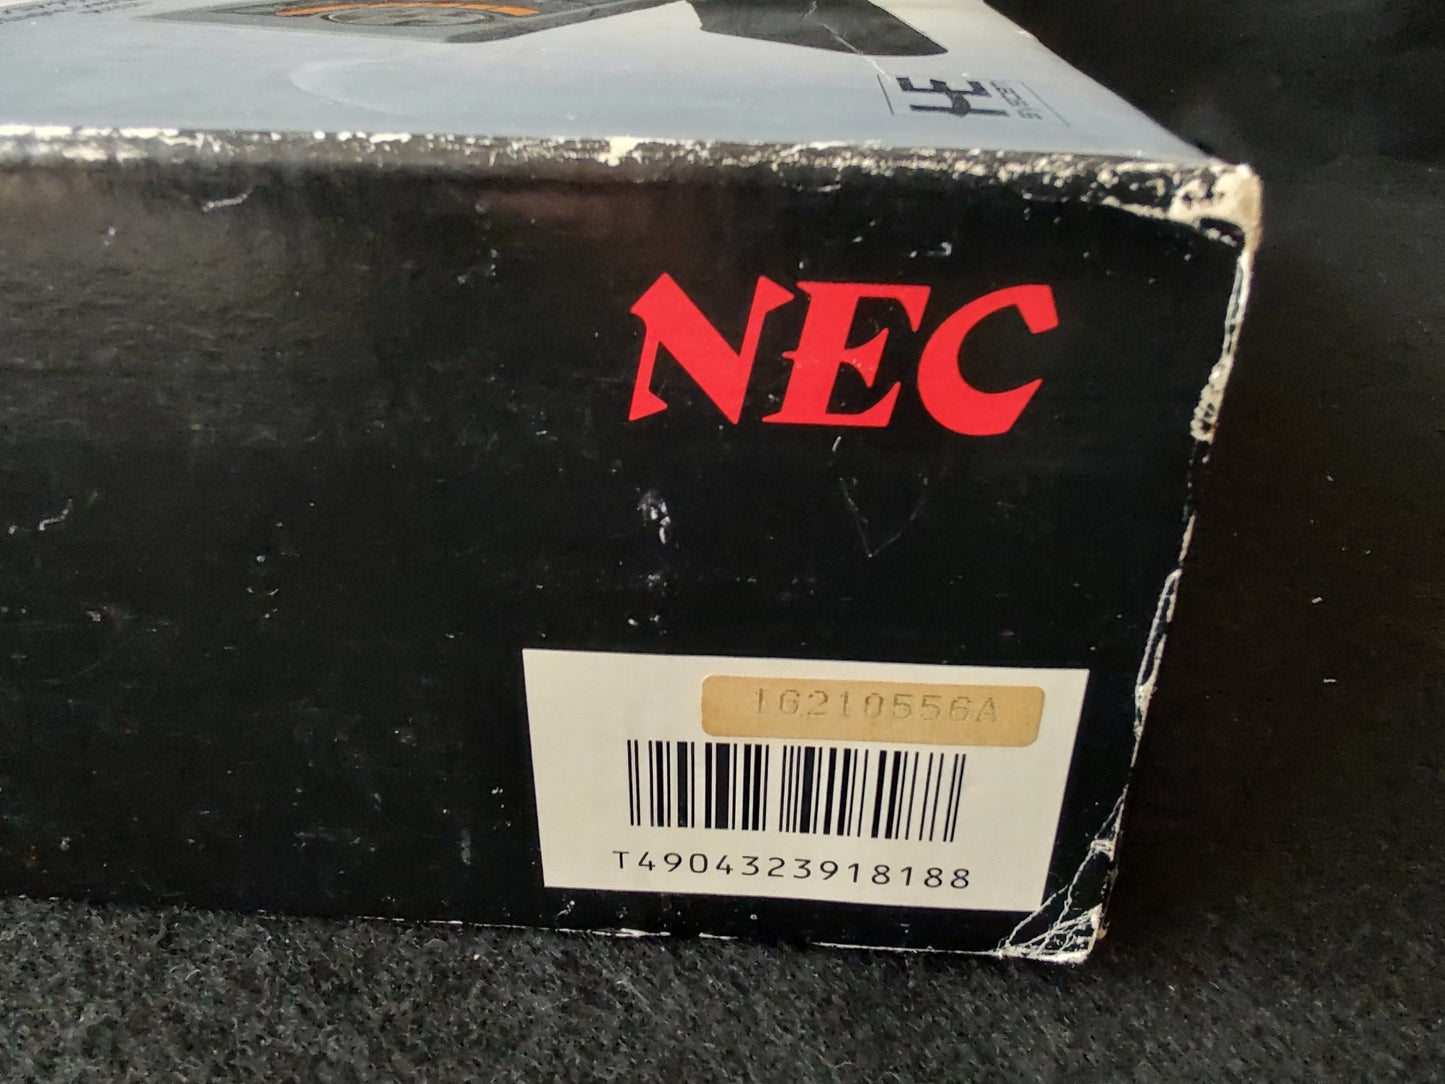 NEC PC Engine Coregrafx2 Console PI-TG7 TurboGrafx16,Pad,AV cable,Box set-f1008-